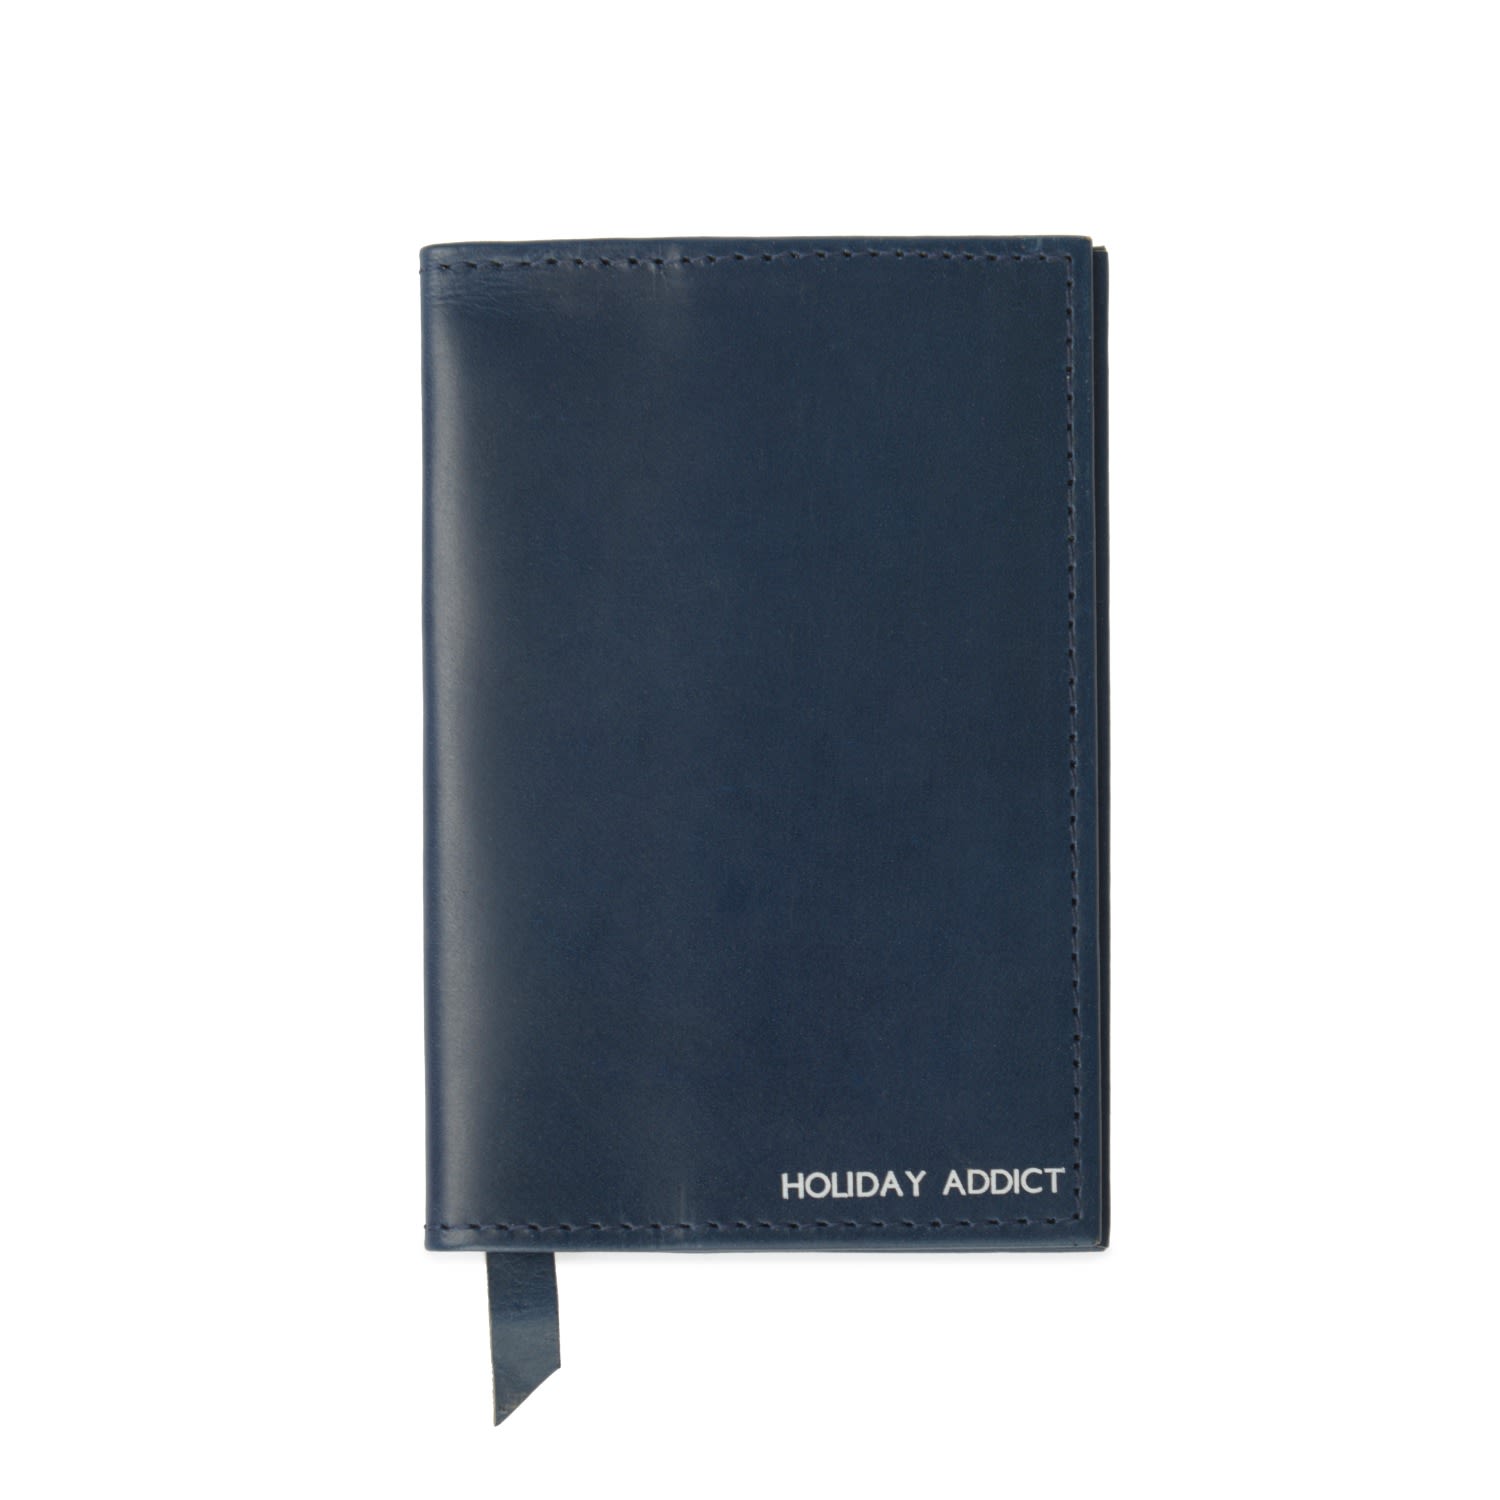 Vida Vida Blue Classic Navy Leather Passport Cover